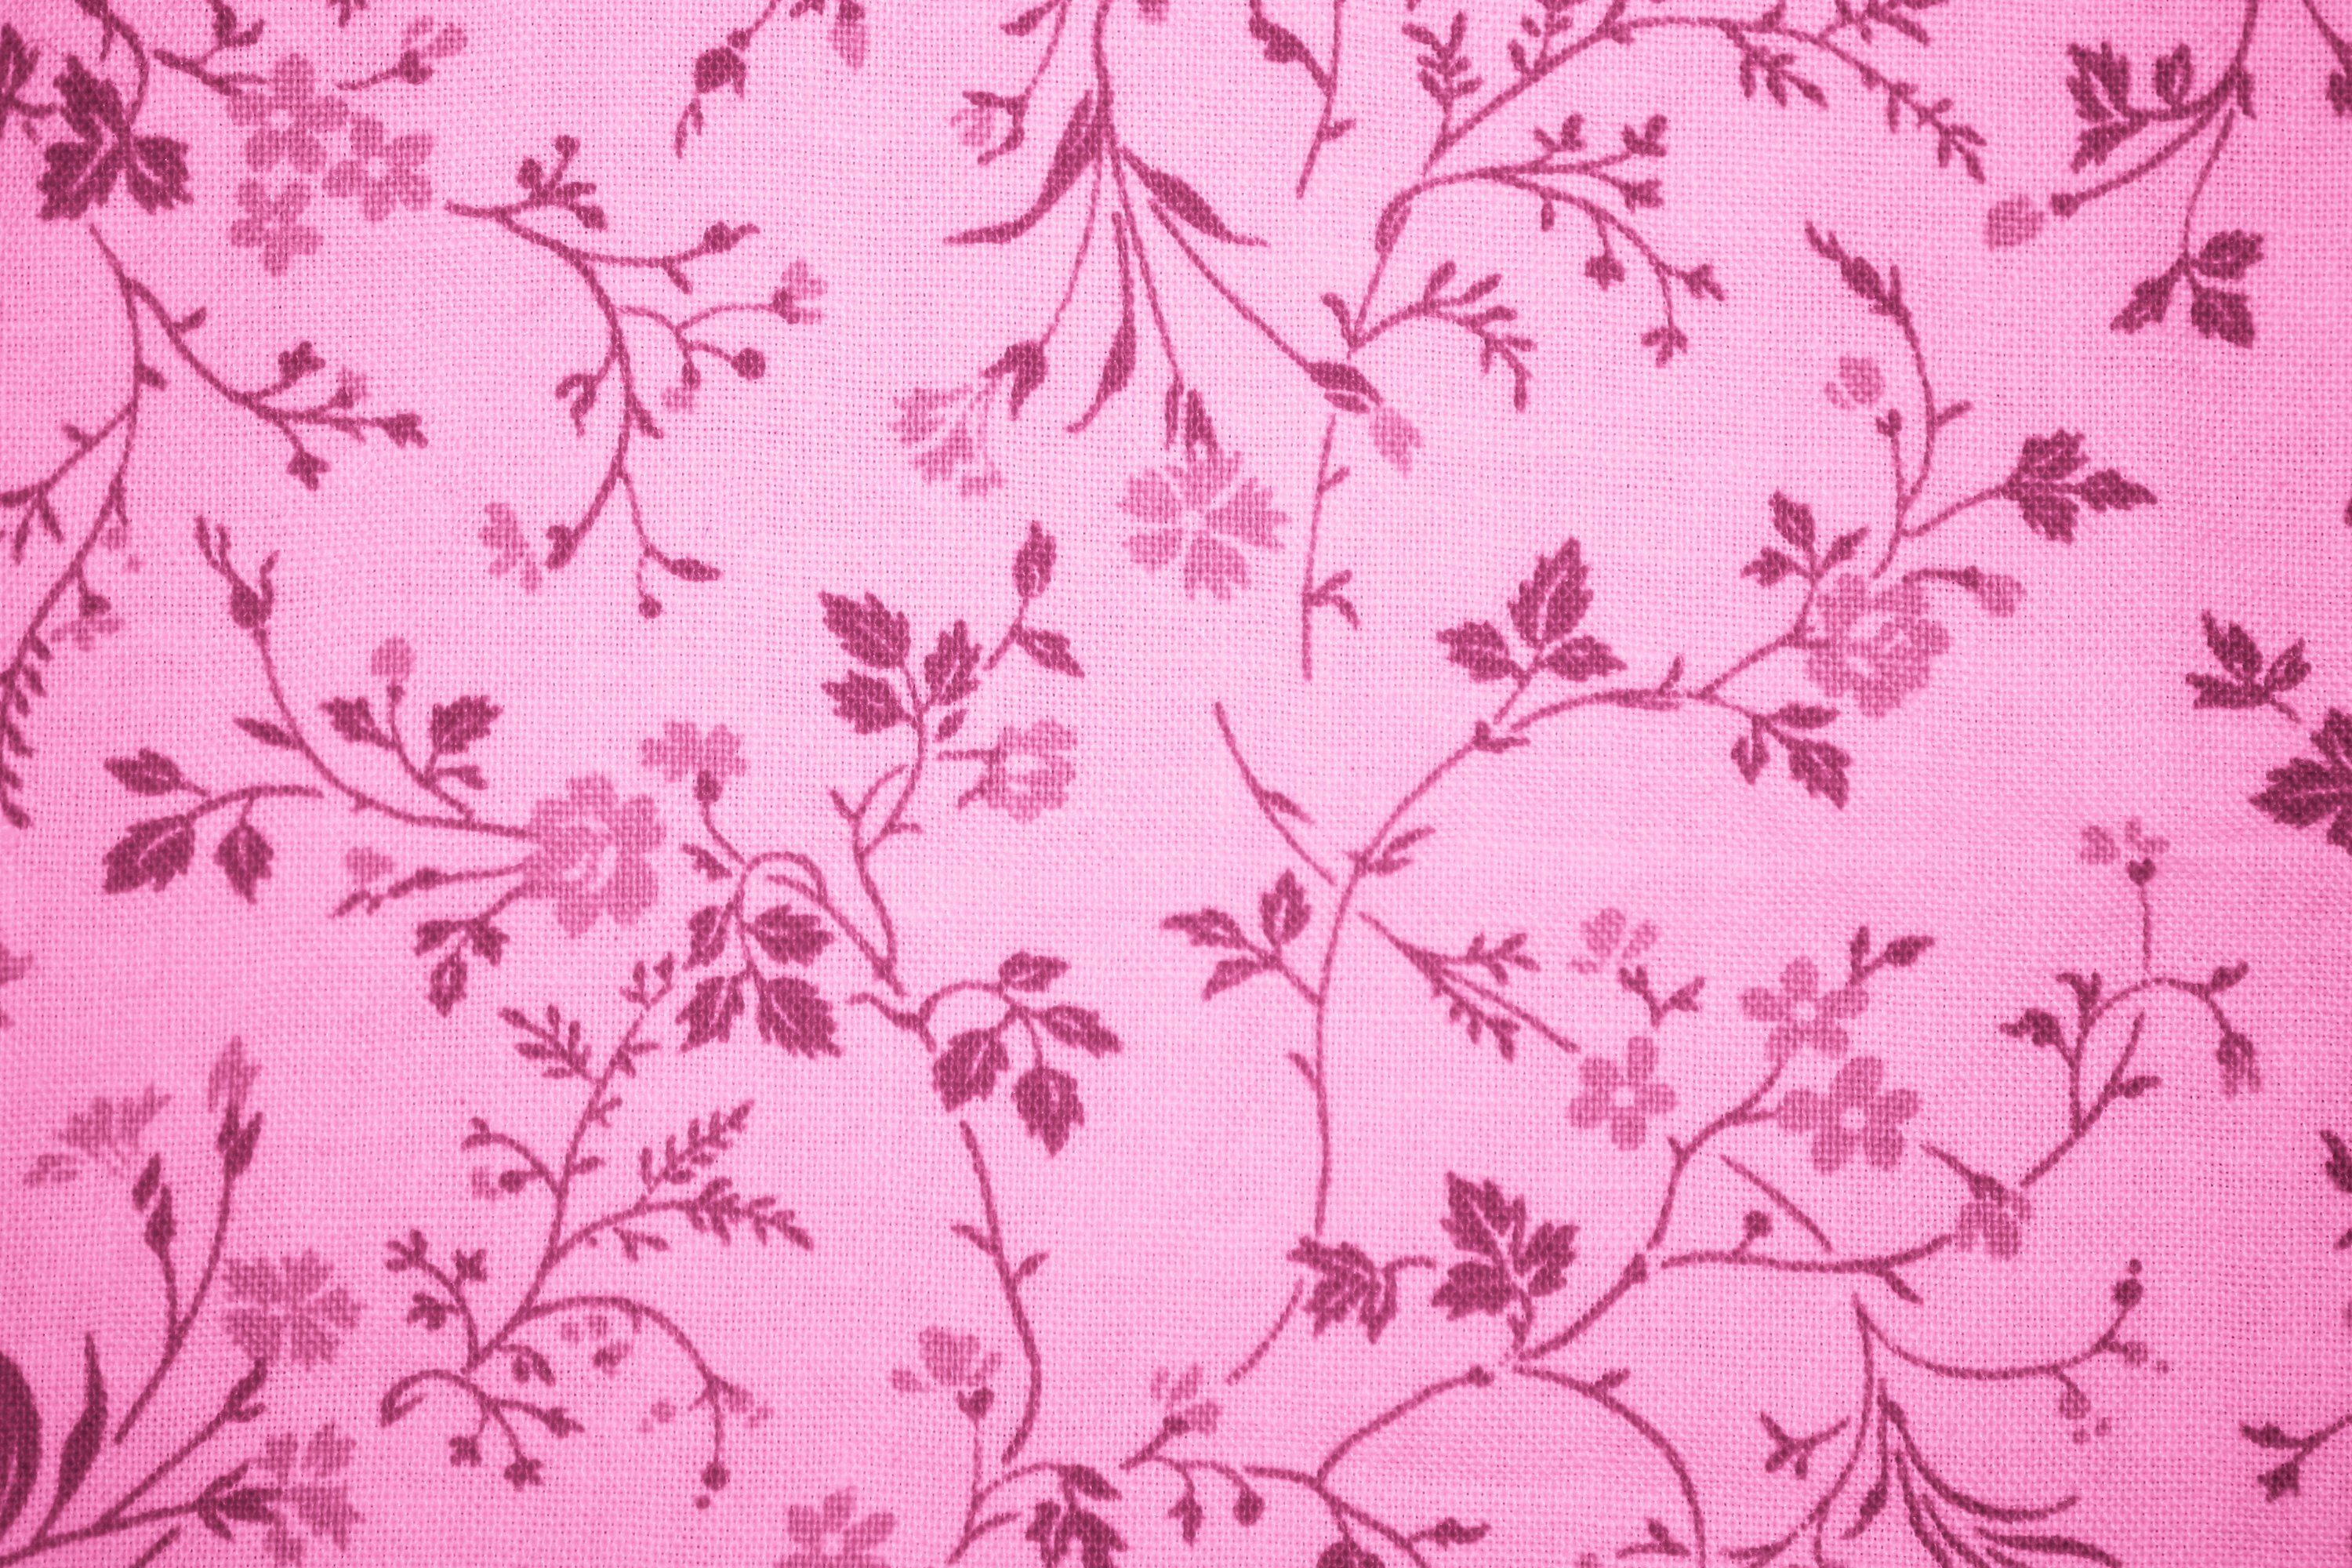 Pink Floral Print Fabric Texture Picture. Free Photograph. Photo Public Domain